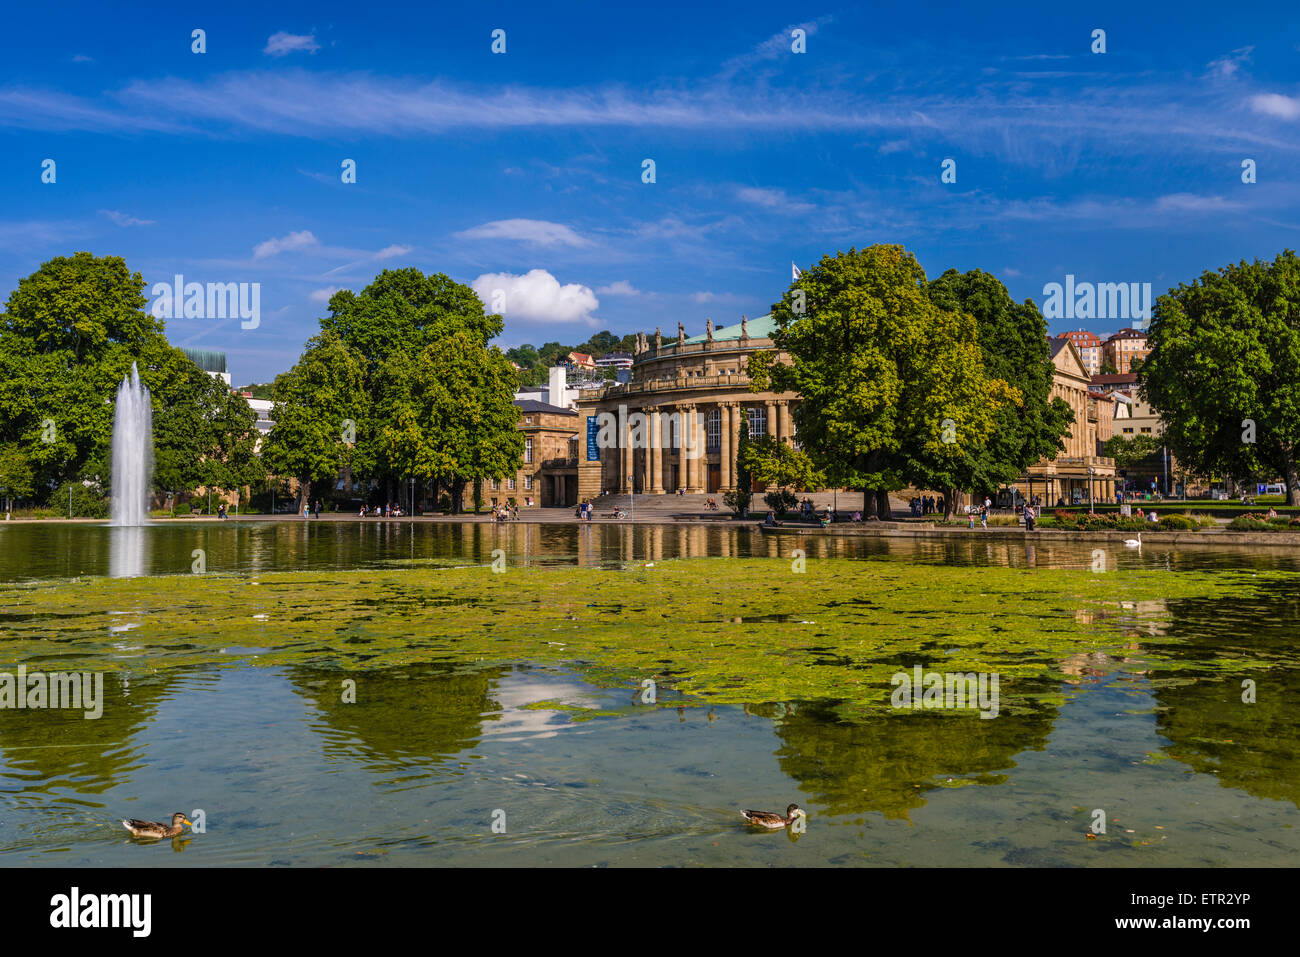 Germany, Baden-Wurttemberg, Stuttgart, Oberer Schlossgarten (upper castle gardens), lake Eckensee, state theatre Stock Photo